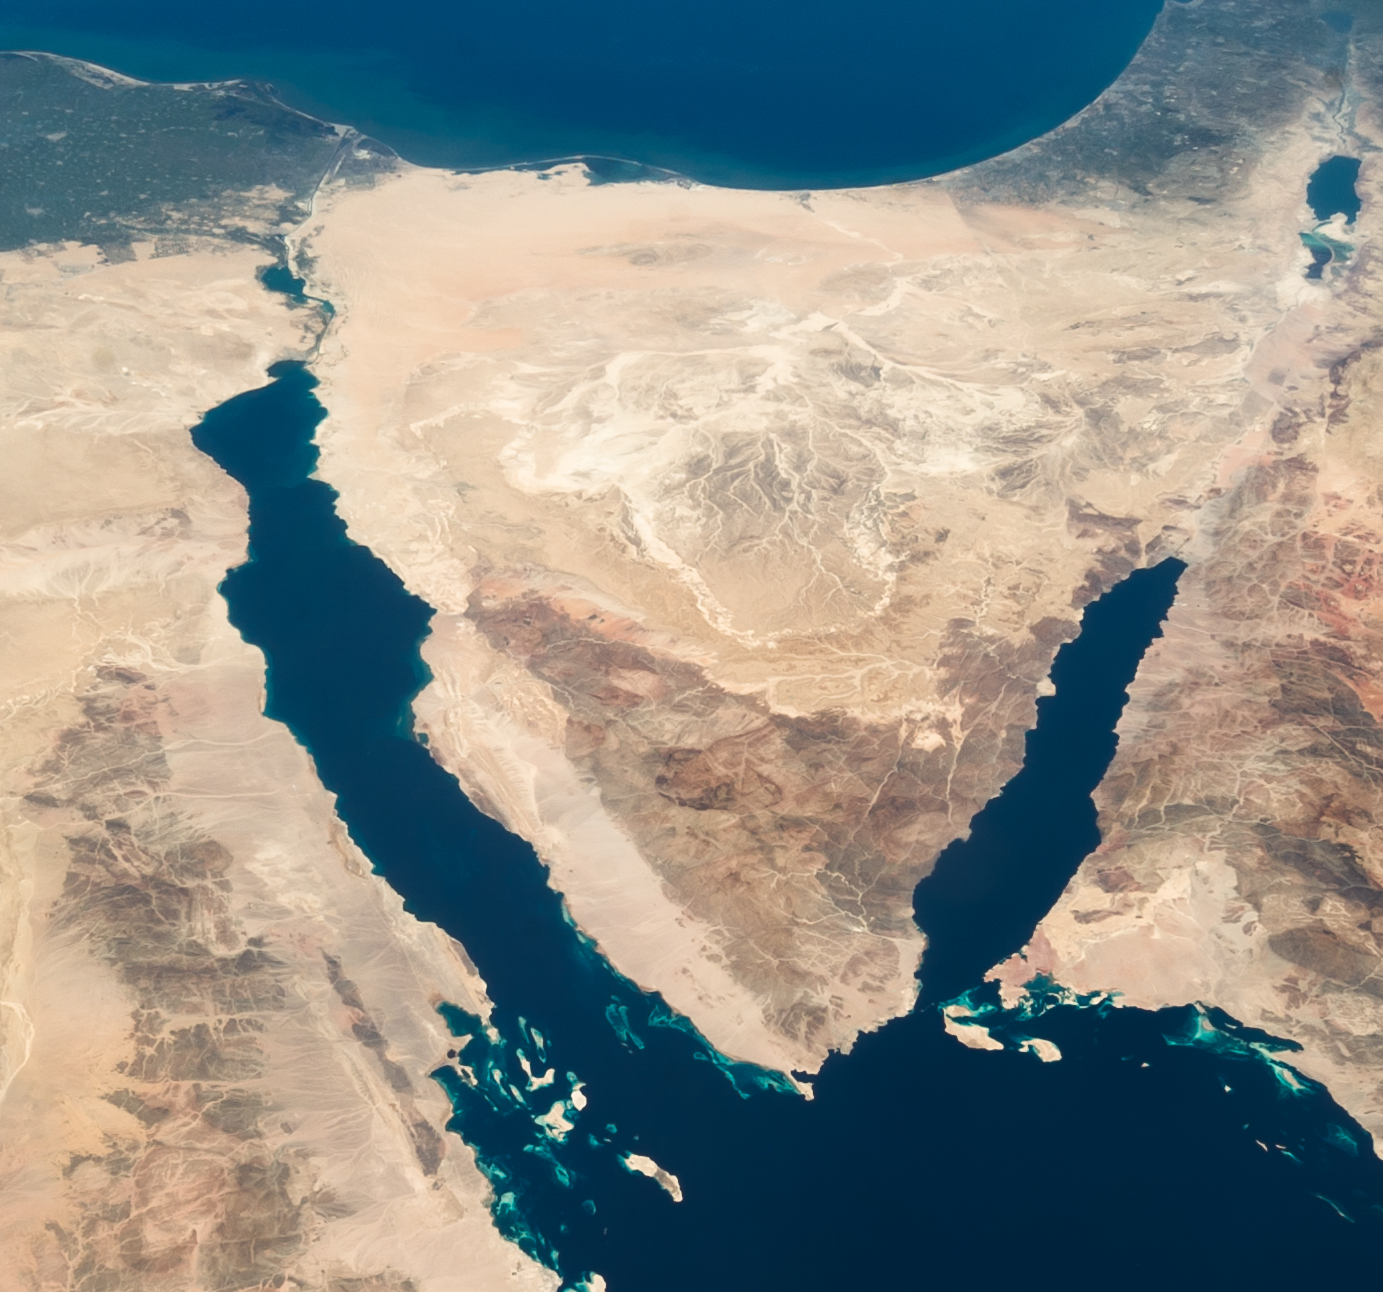 ISS035-E-007148_Nile_-_Sinai_-_Dead_Sea_-_Wide_Angle_View_(cropped)